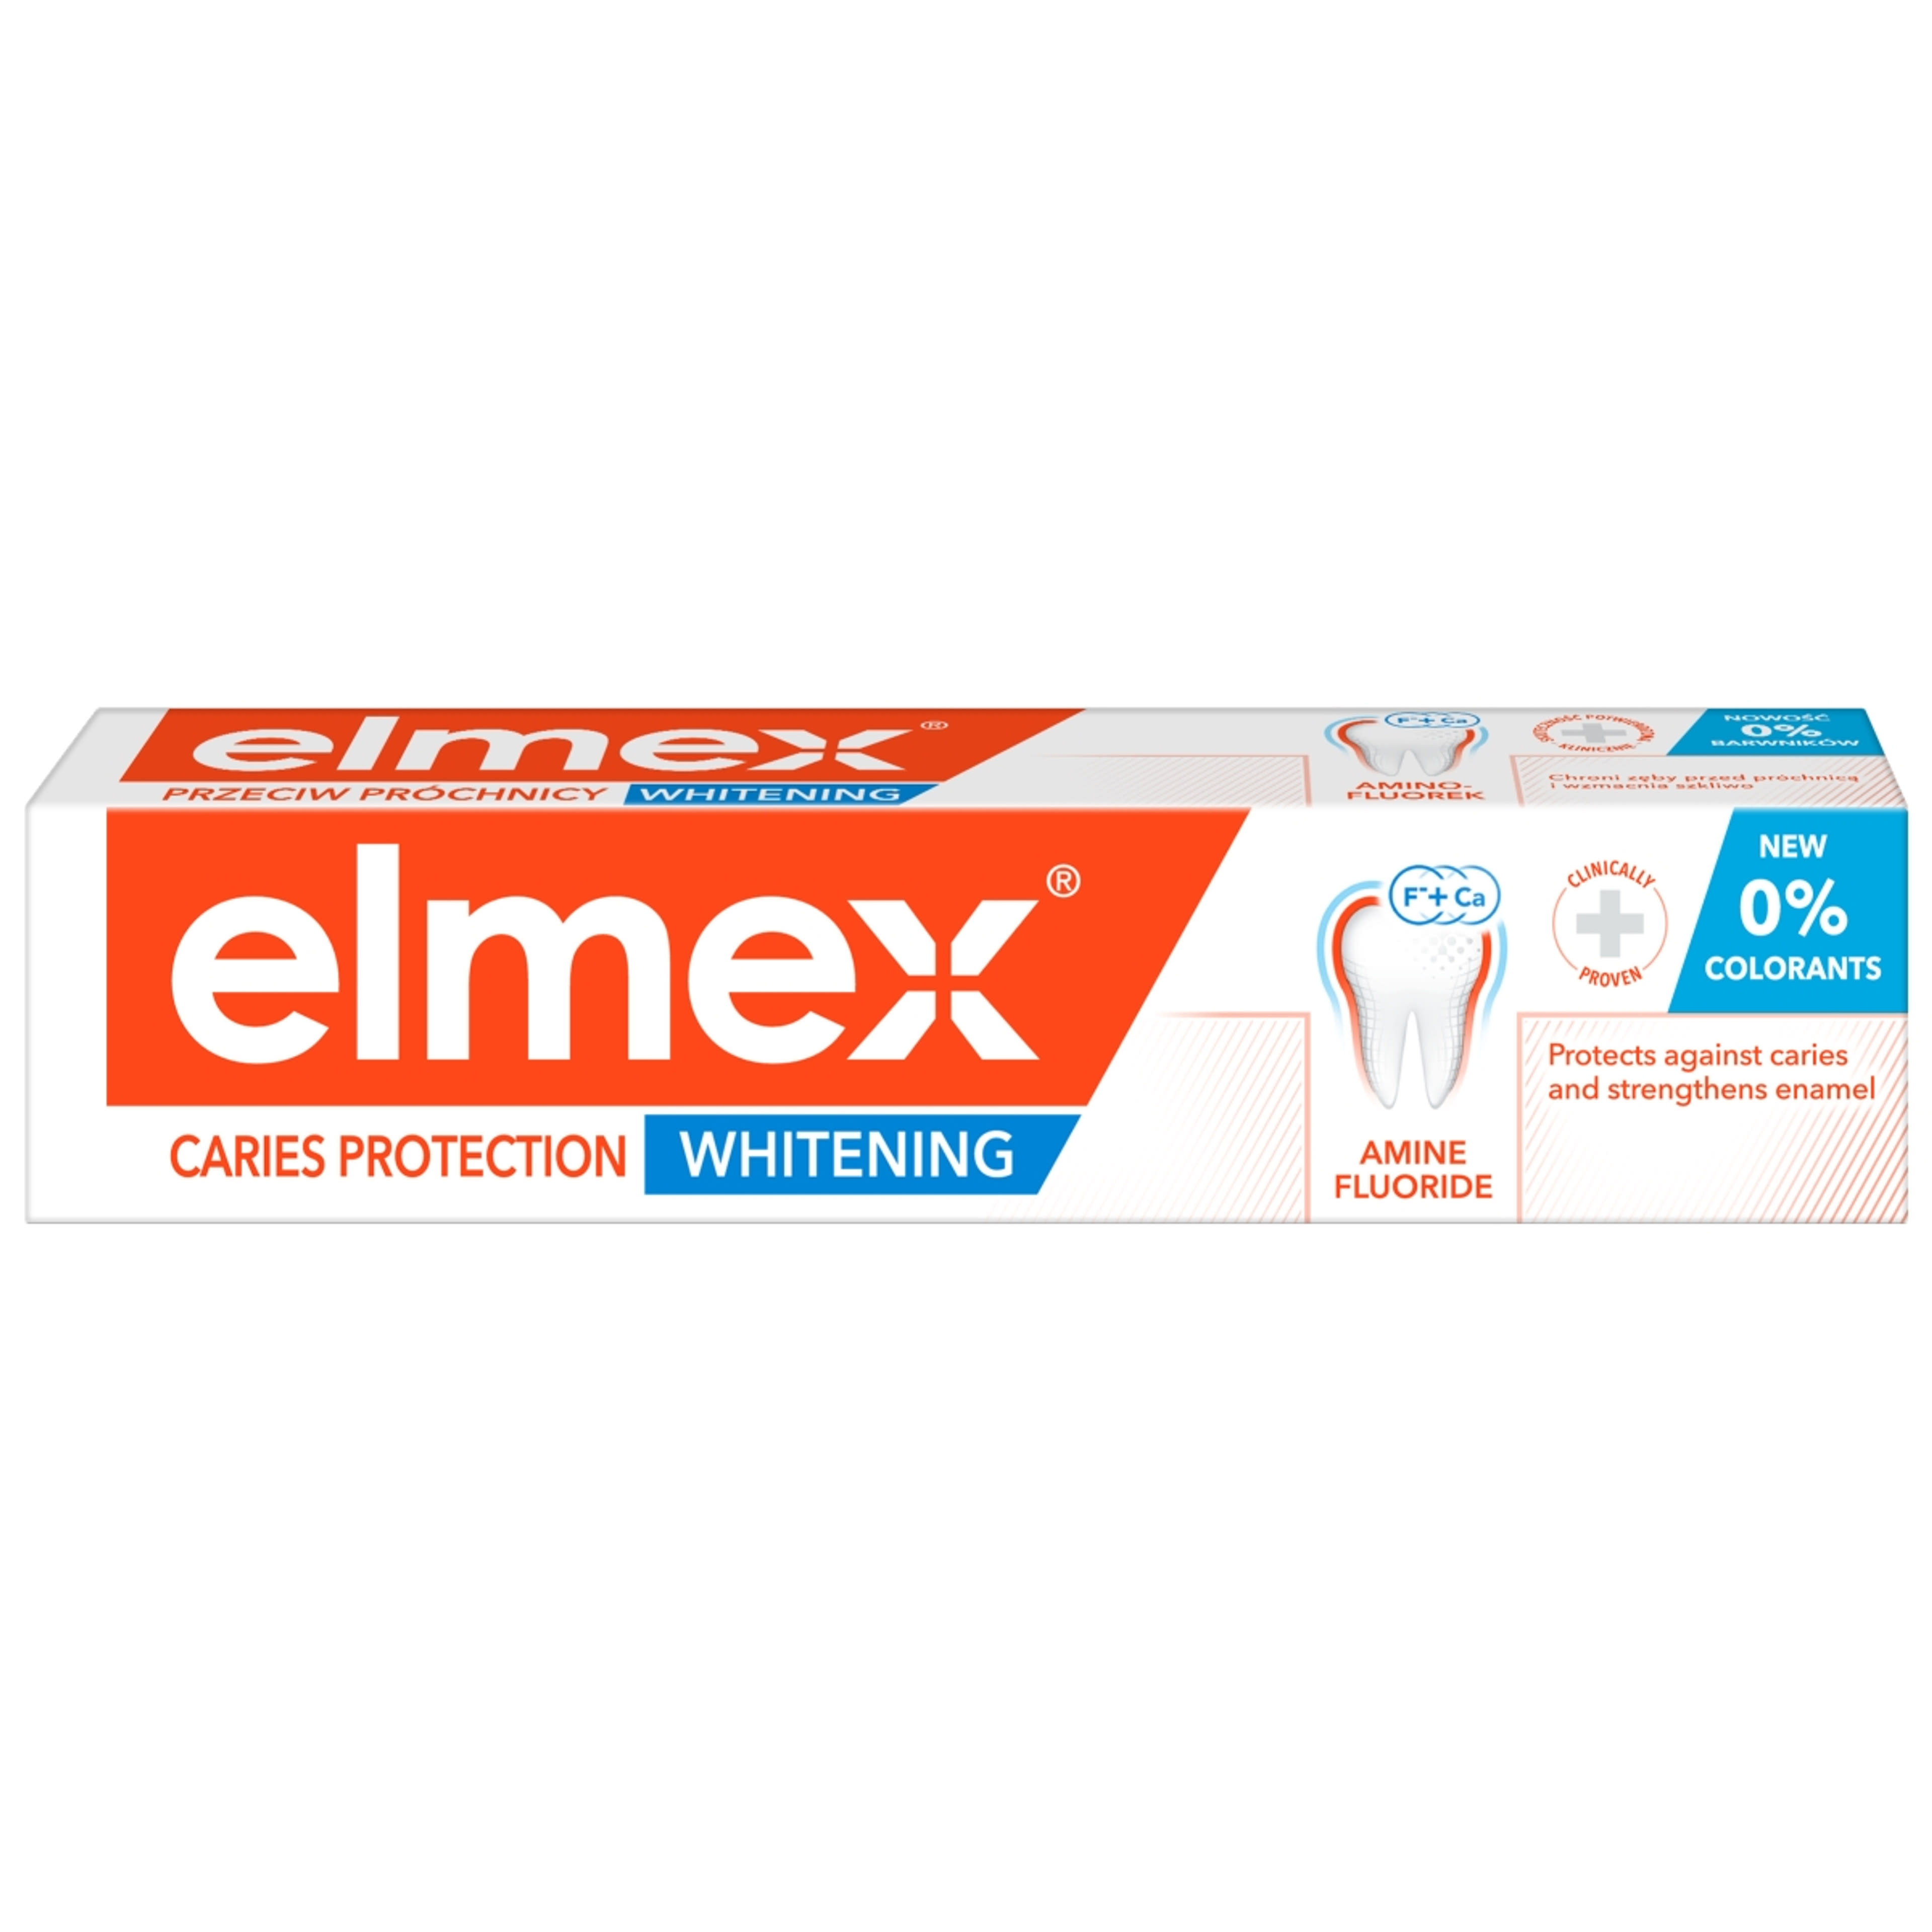 Elmex fogkrém caries protection whitening - 75 ml